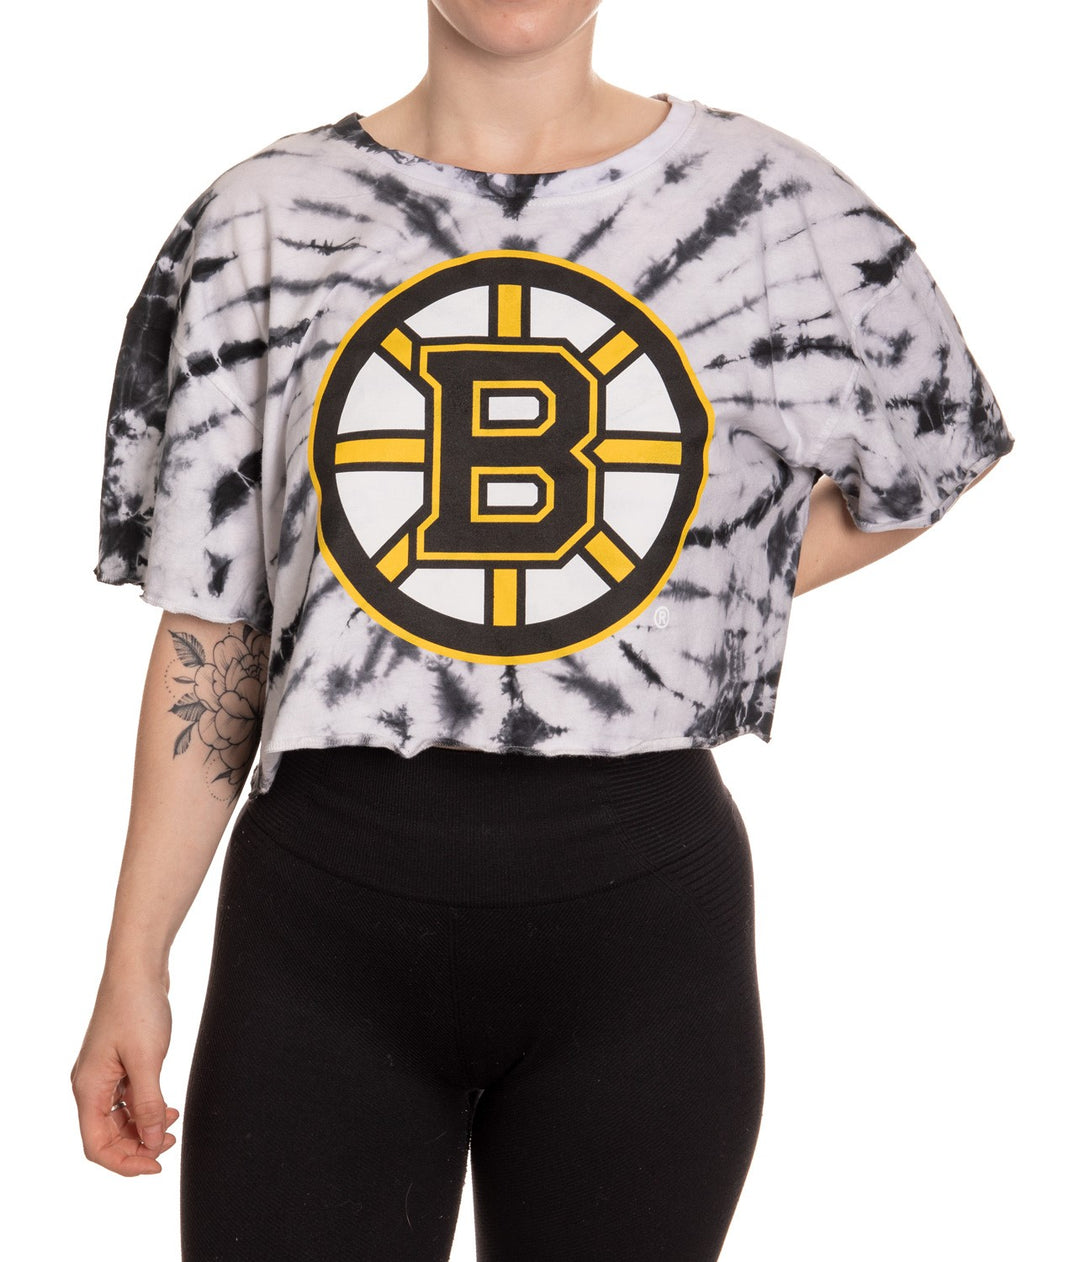 Boston Bruins Tie Dye Crop TOp Front View